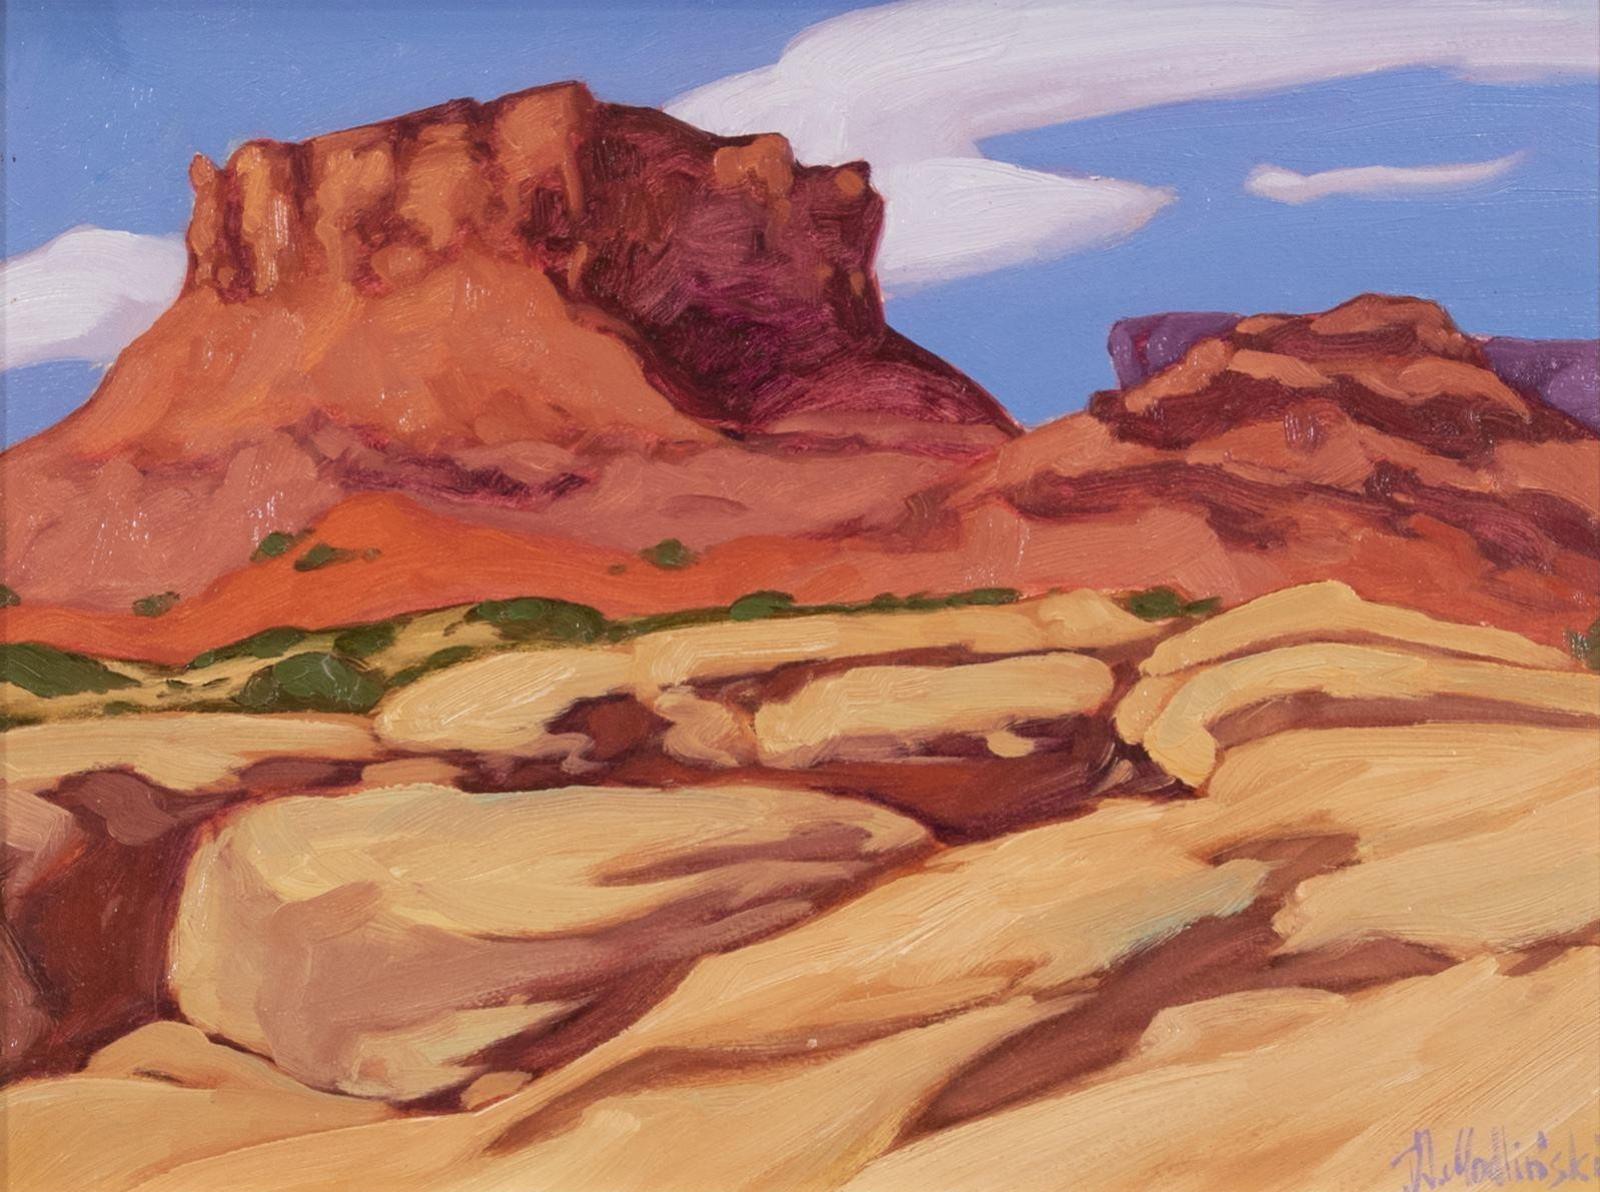 Dominik J. Modlinski (1970) - Reaching To The Sky, Canyonlands N. P. Utah; 2005